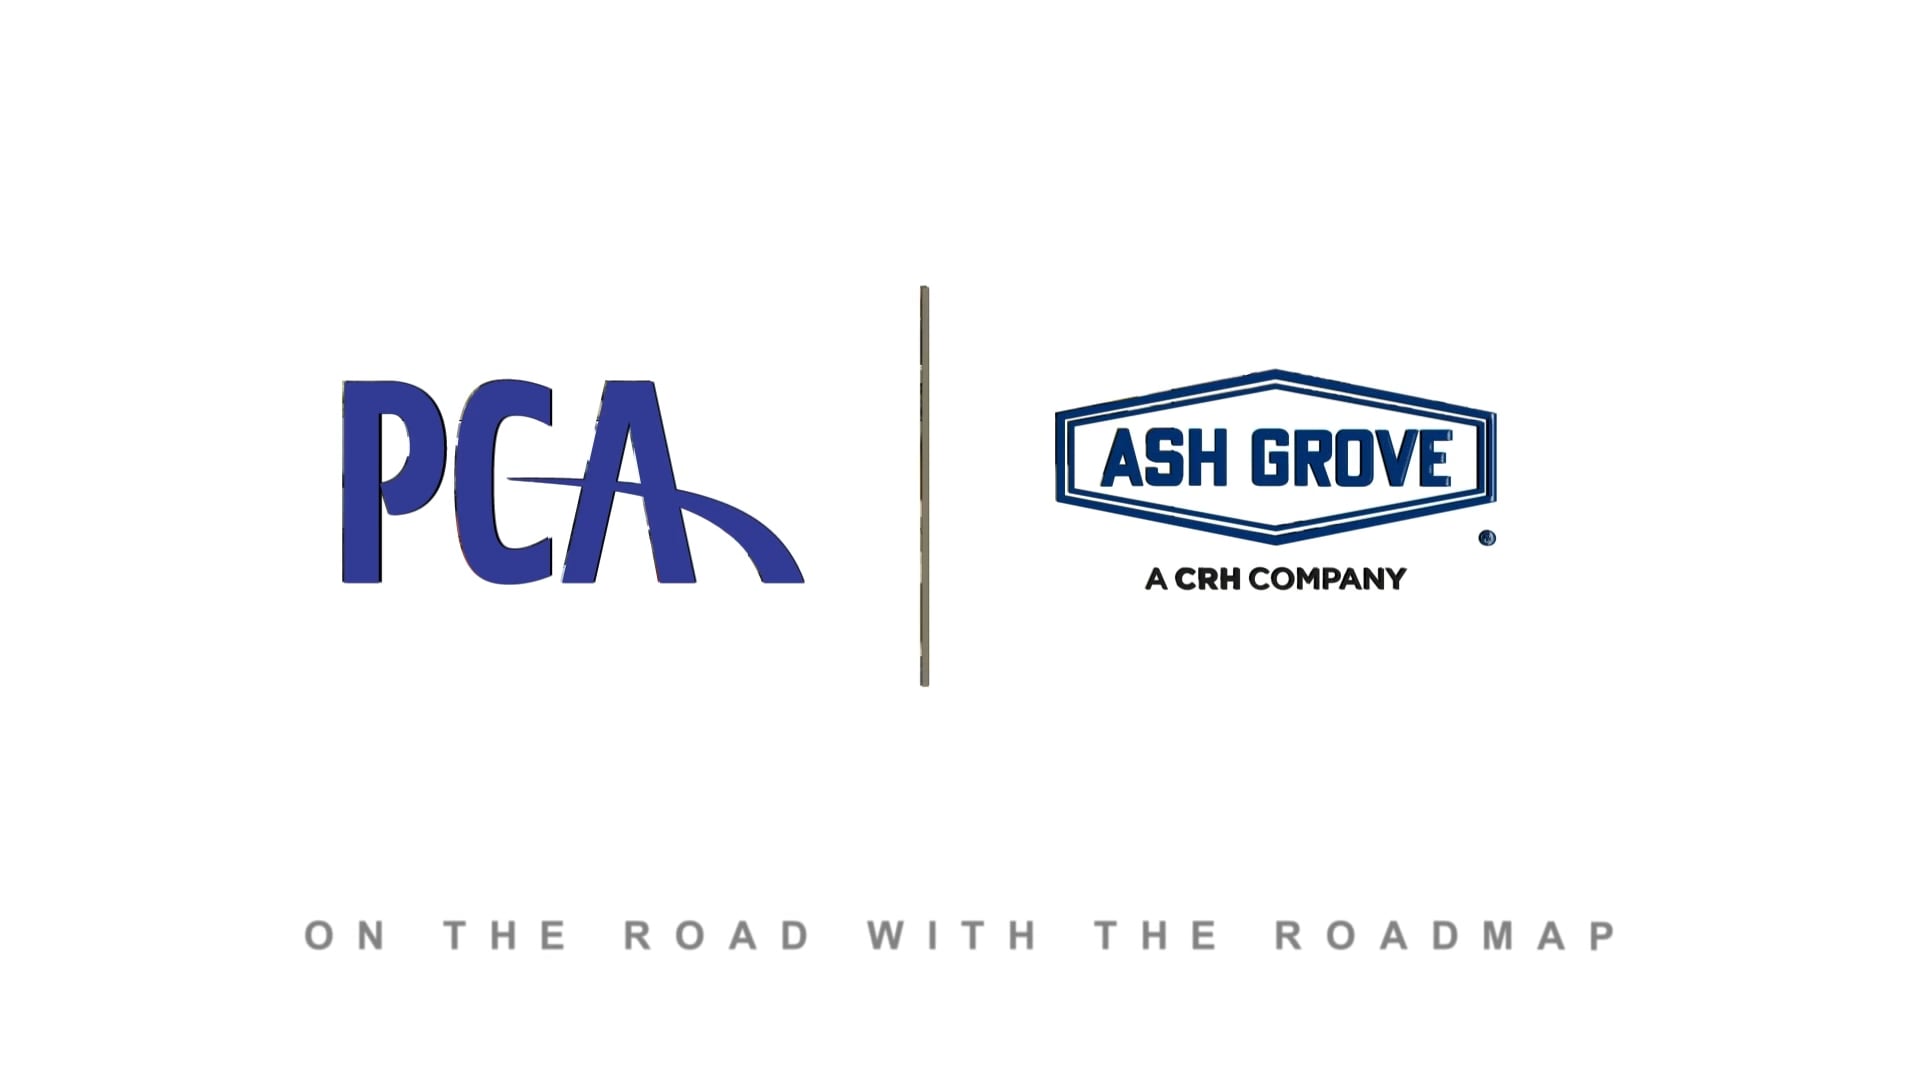 Ash Grove, a CRH Company: Sustainability